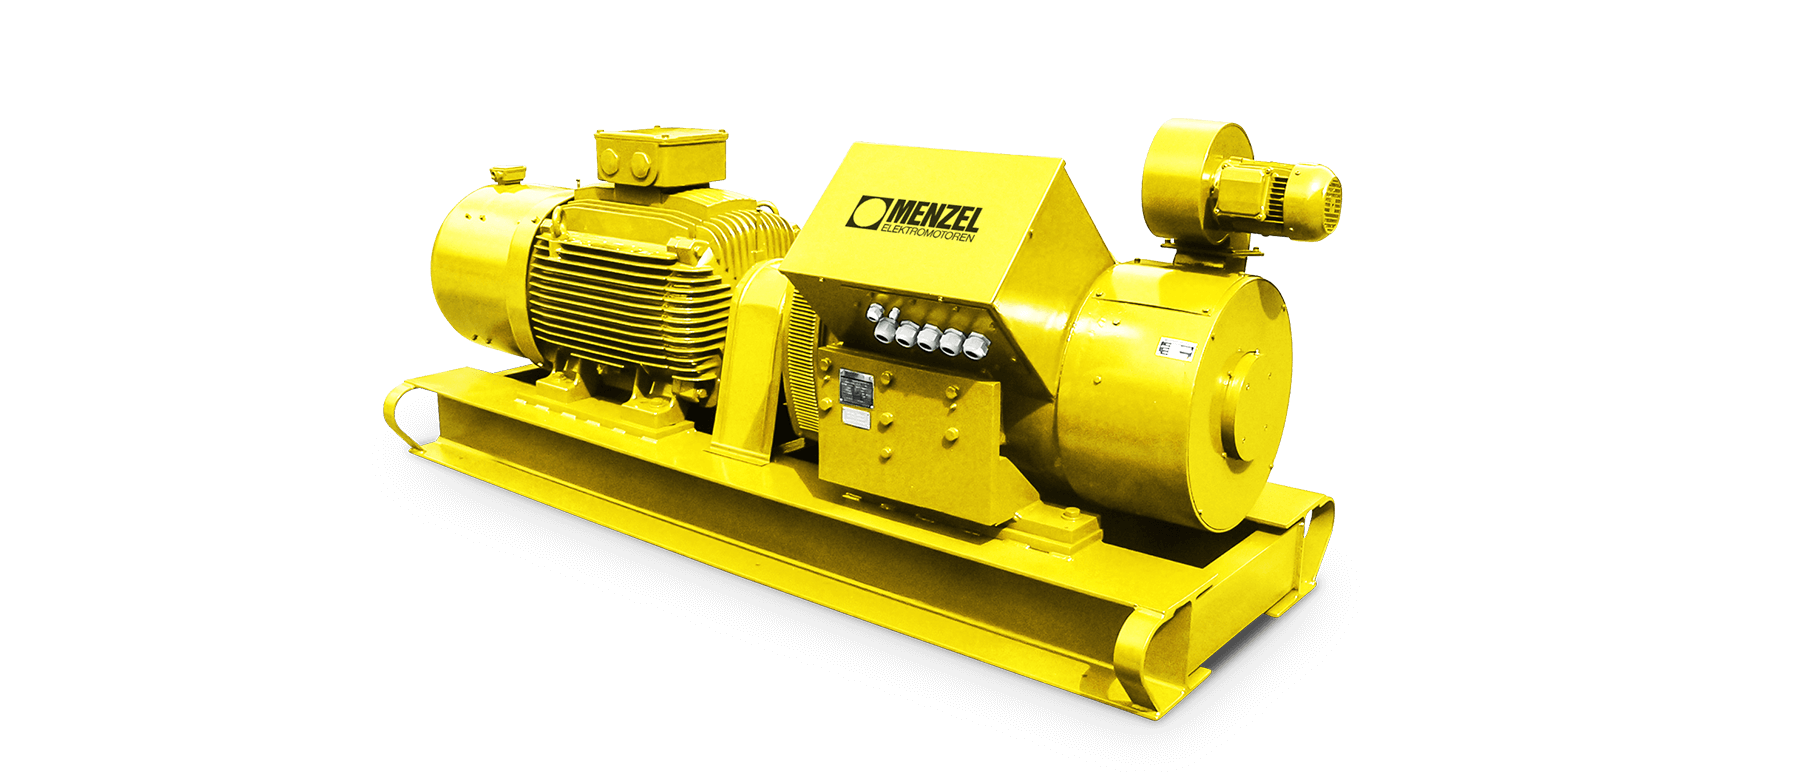 Rotating motor-generator unit